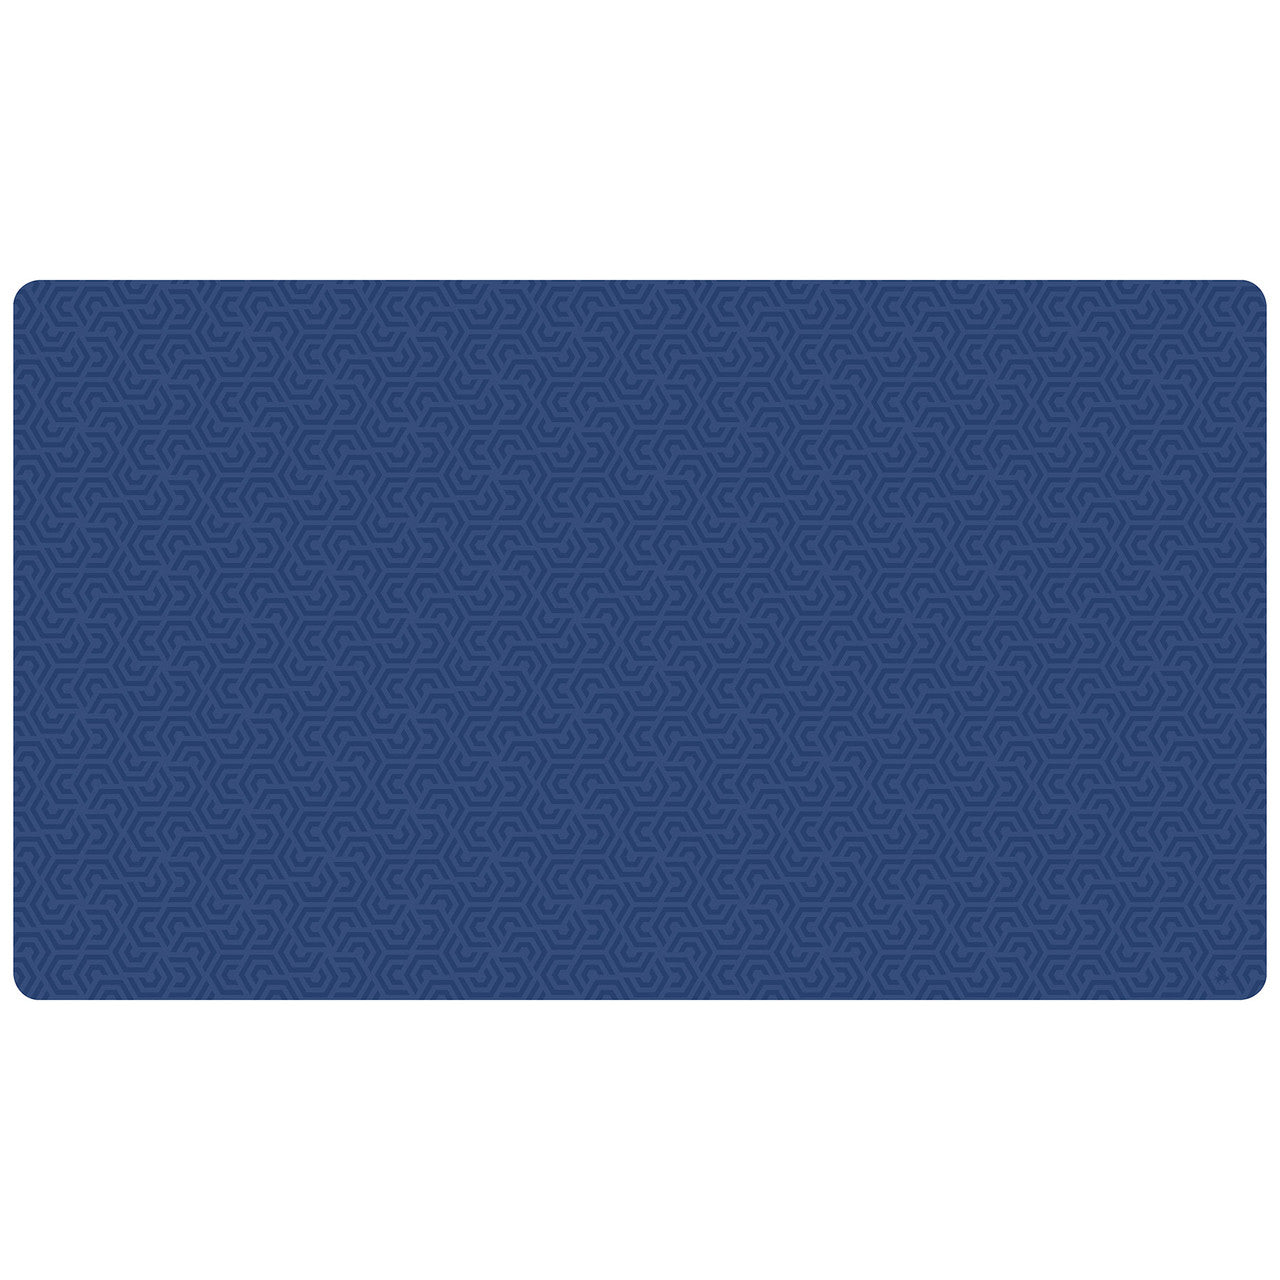 Blue Patterned Playmat